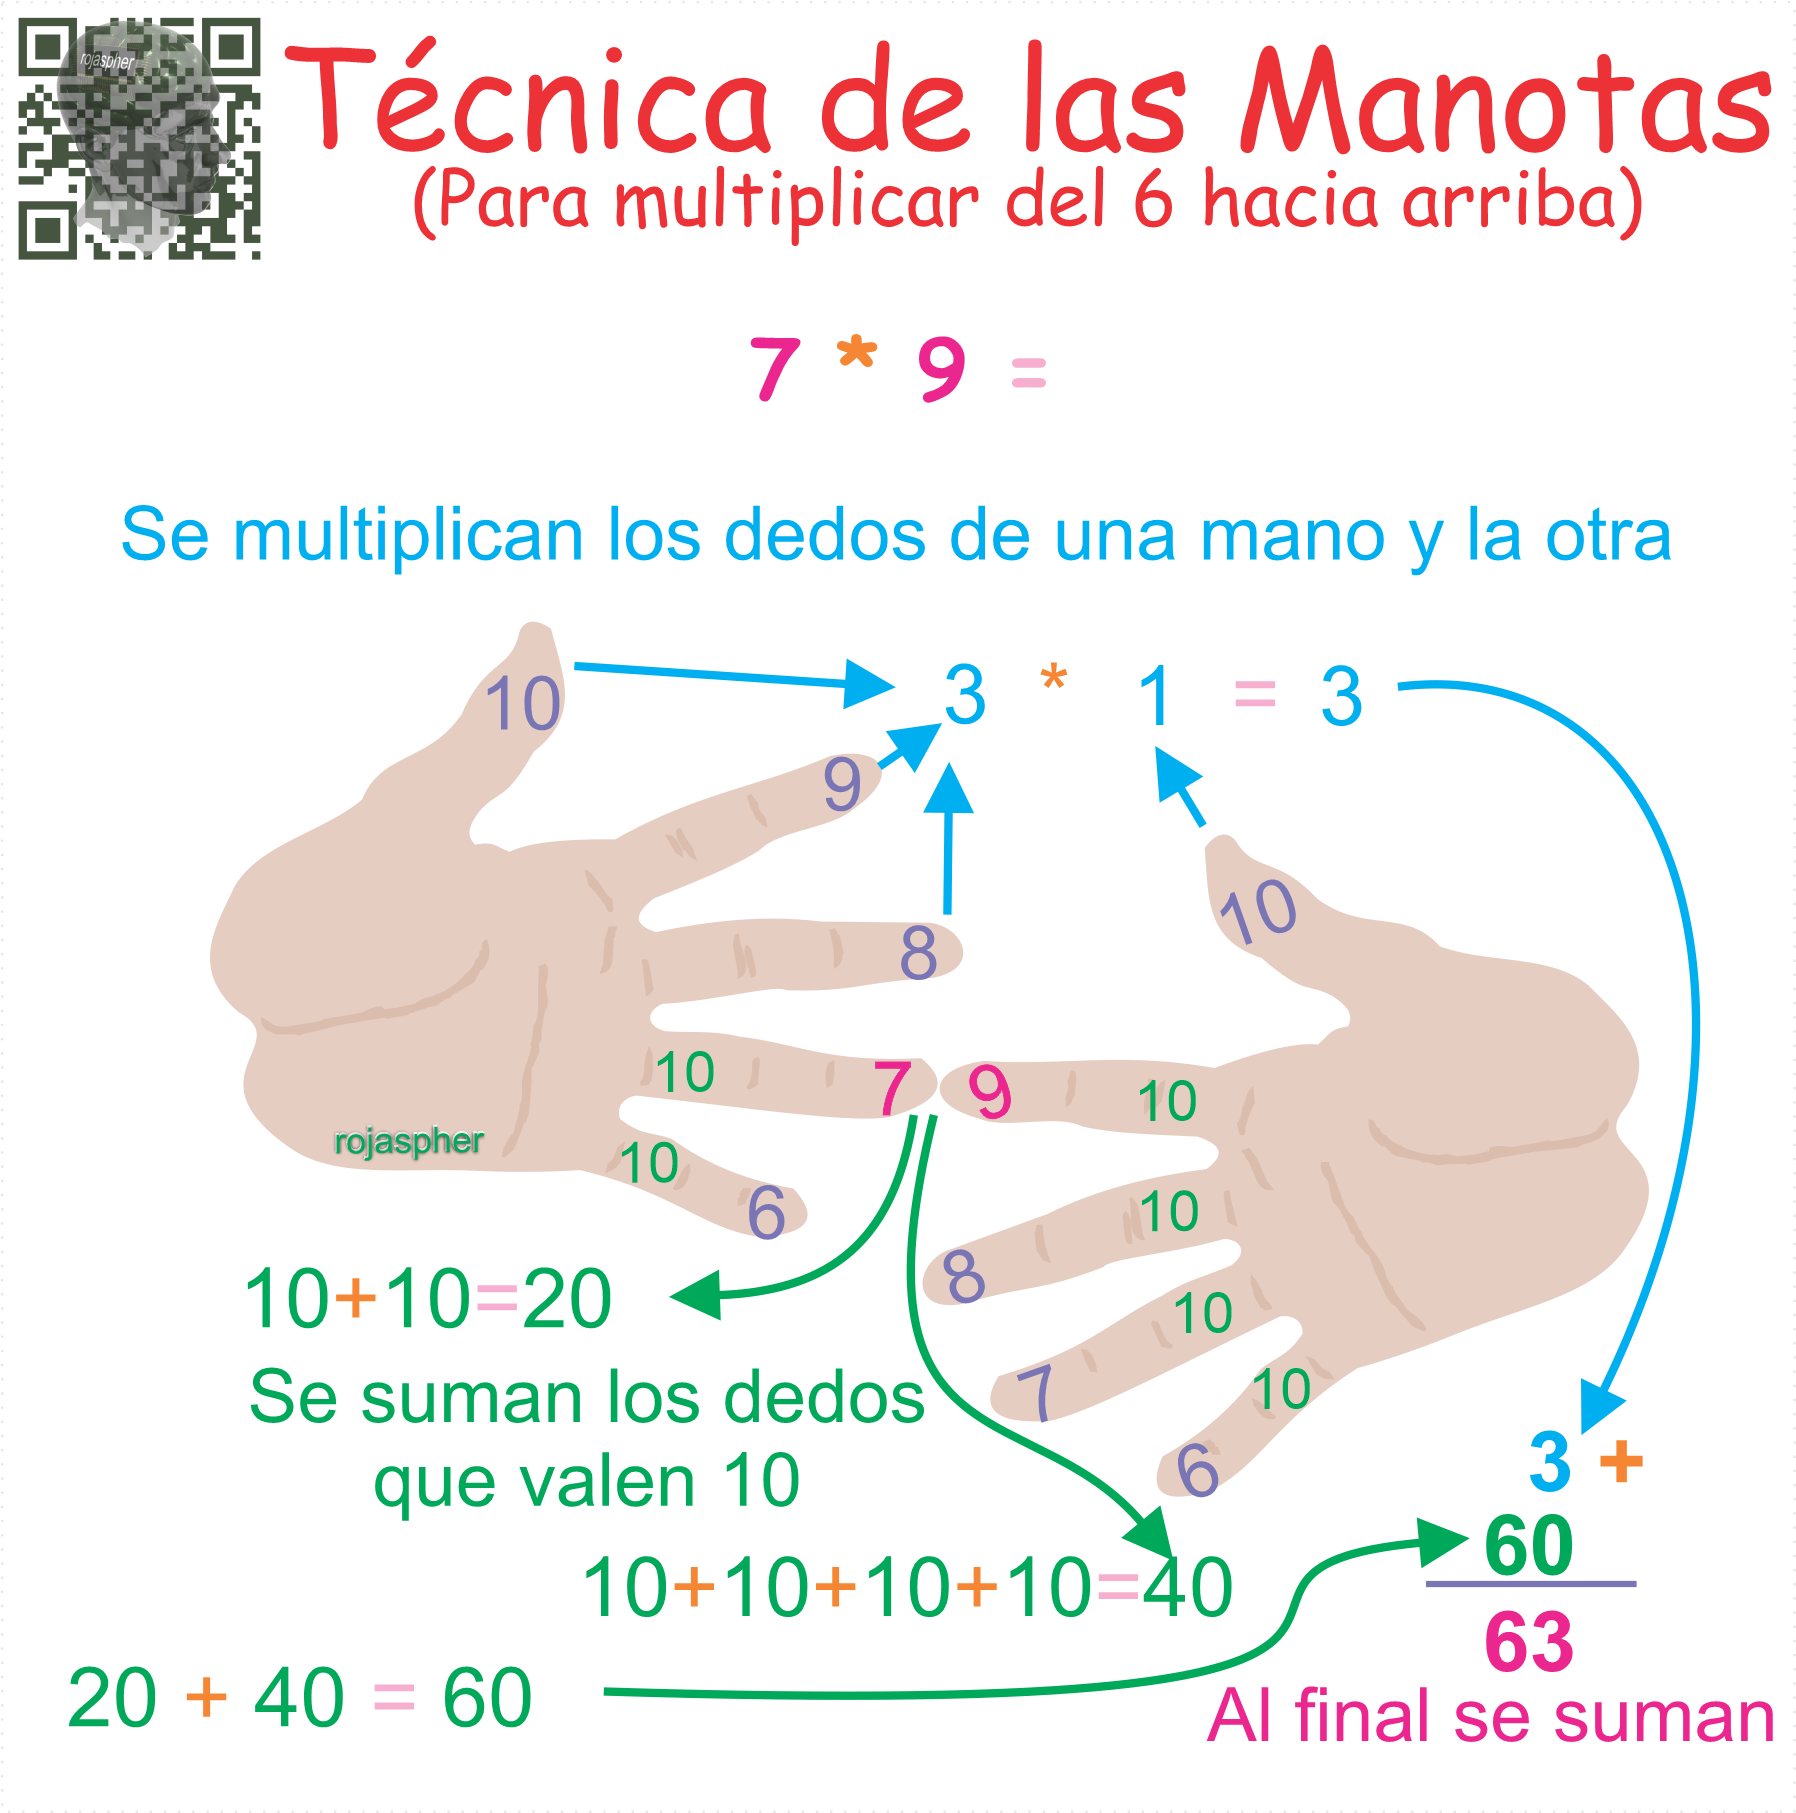 Técnica de la Manotas